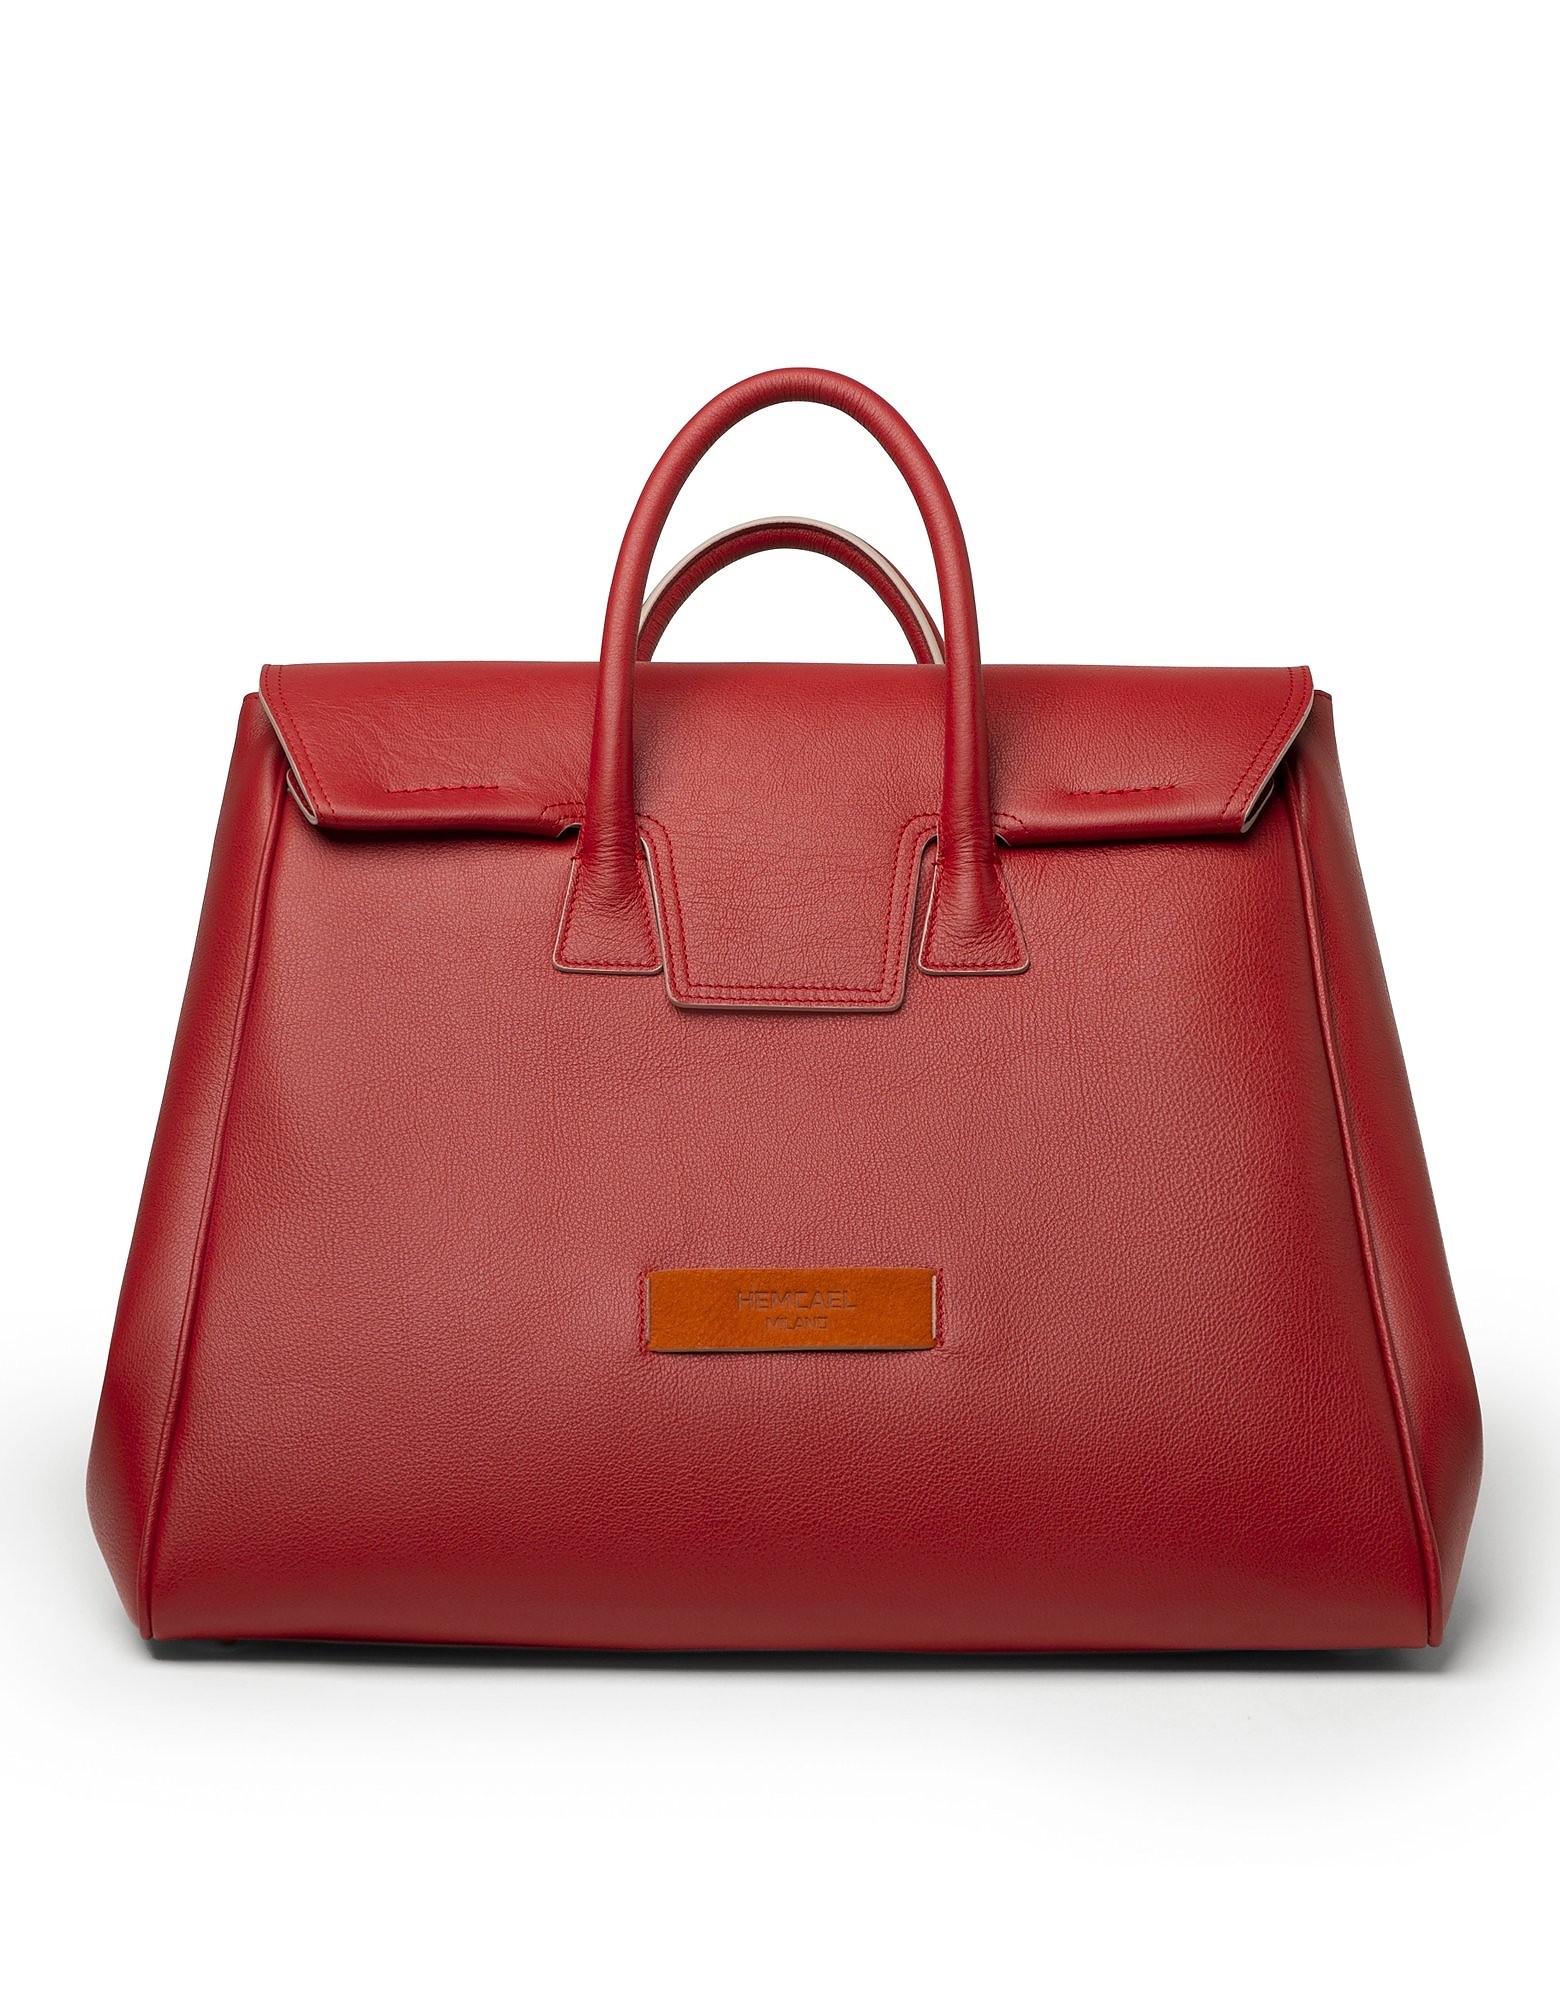 Hemcael Designer Handbags Edie Leather Shopping Bag In Bordeaux